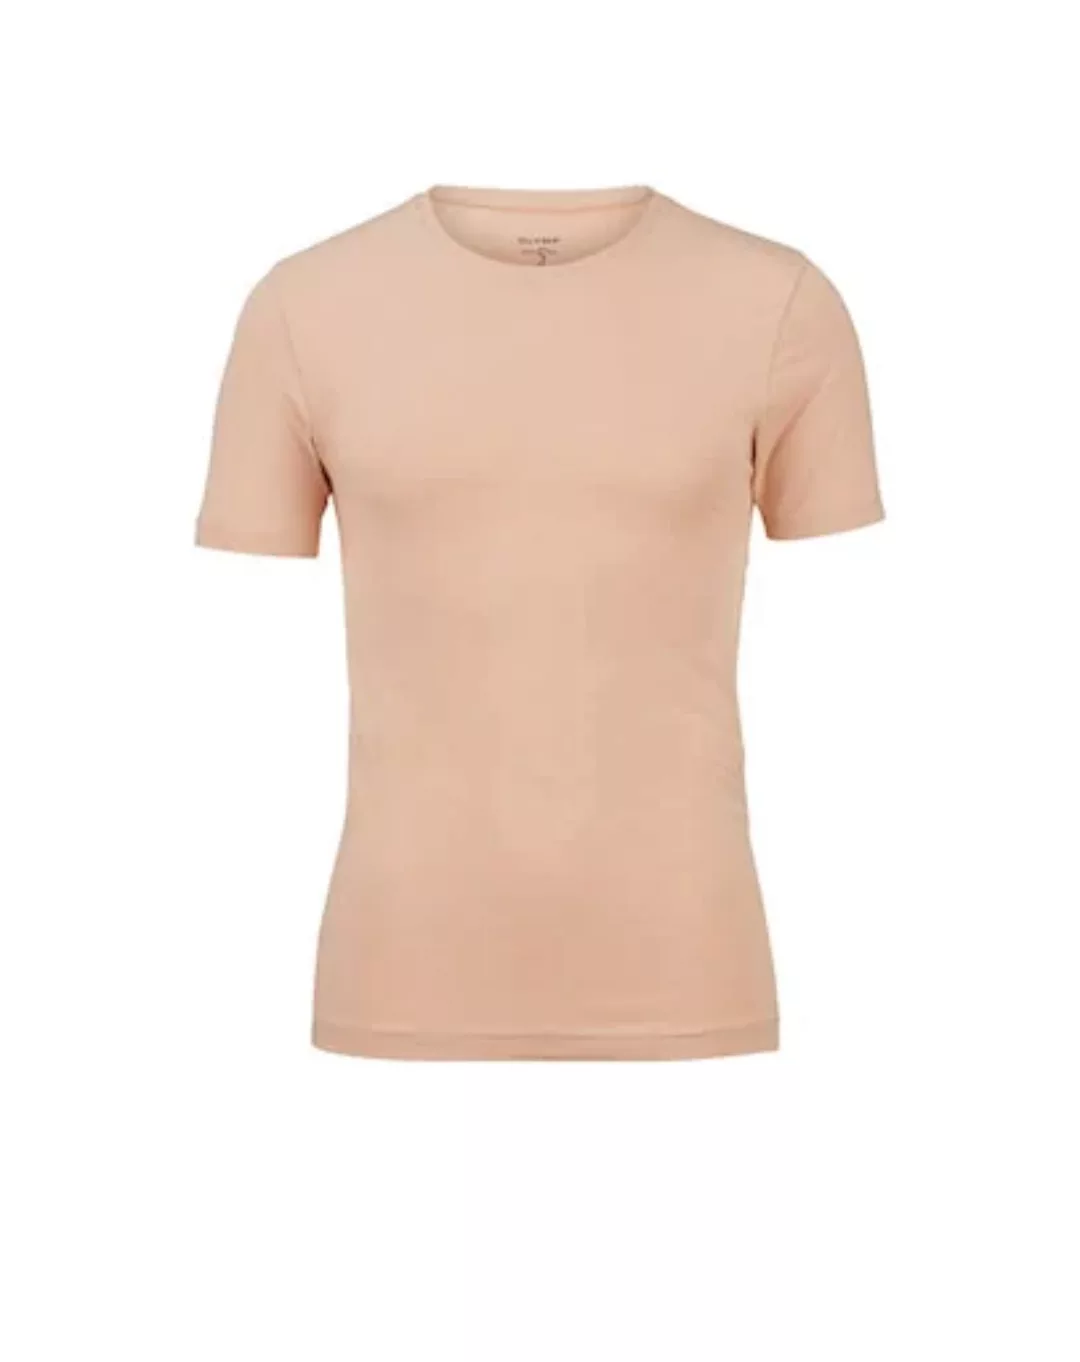 OLYMP T-Shirt Level Five body fit V-Ausschnitt, Ideal zum Unterziehen günstig online kaufen